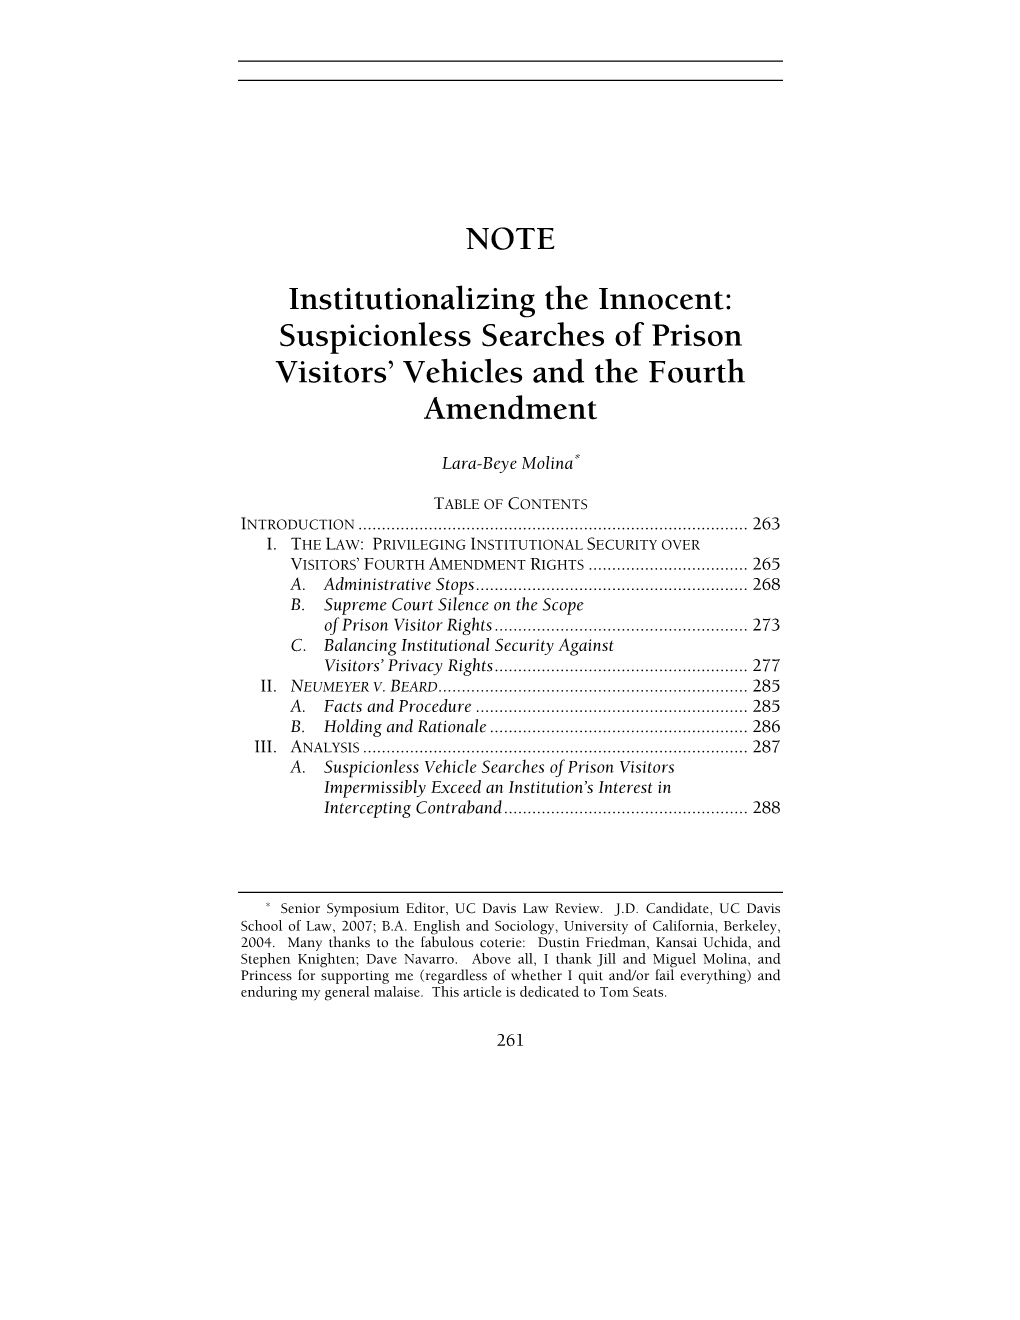 Suspicionless Searches of Prison Visitors' Vehicles and the Fourth Amendment